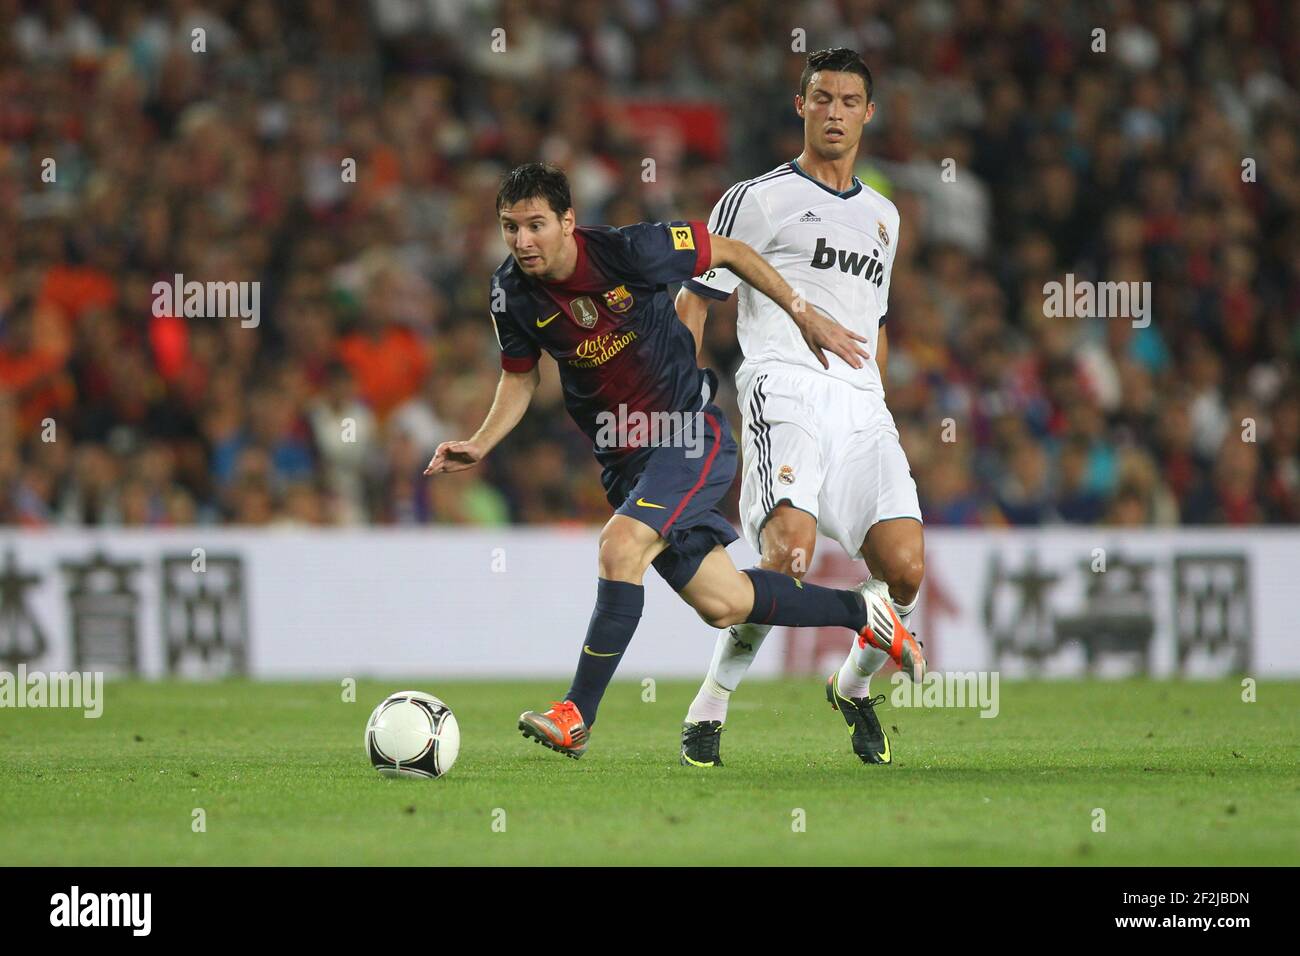 FOOTBALL - SPANISH SUPER CUP 2012 - 1ST LEG - FC BARCELONA v REAL MADRID - 23/08/2012 - PHOTO MANUEL BLONDEAU / AOP.Press / DPPI - LIONEL MESSI AND CRISTIANO RONALDO Stock Photo